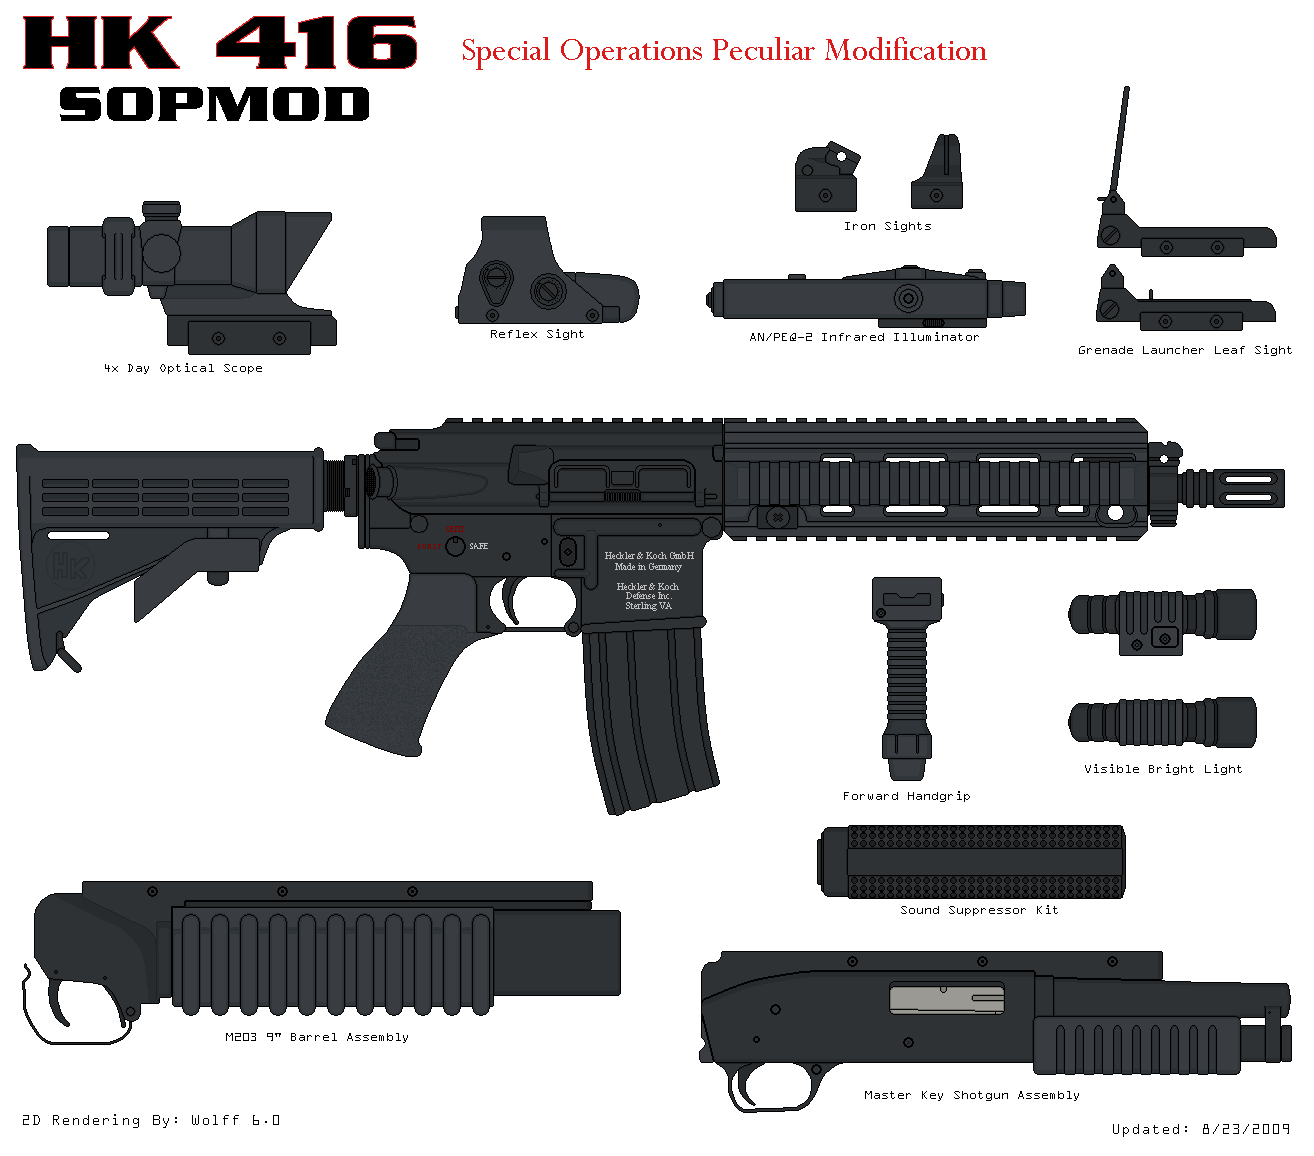 Keunggulan HK416 diantaranya mengadopsi sistem modular, sehingga mudah disesuaikan dengan beragam misi tempur.